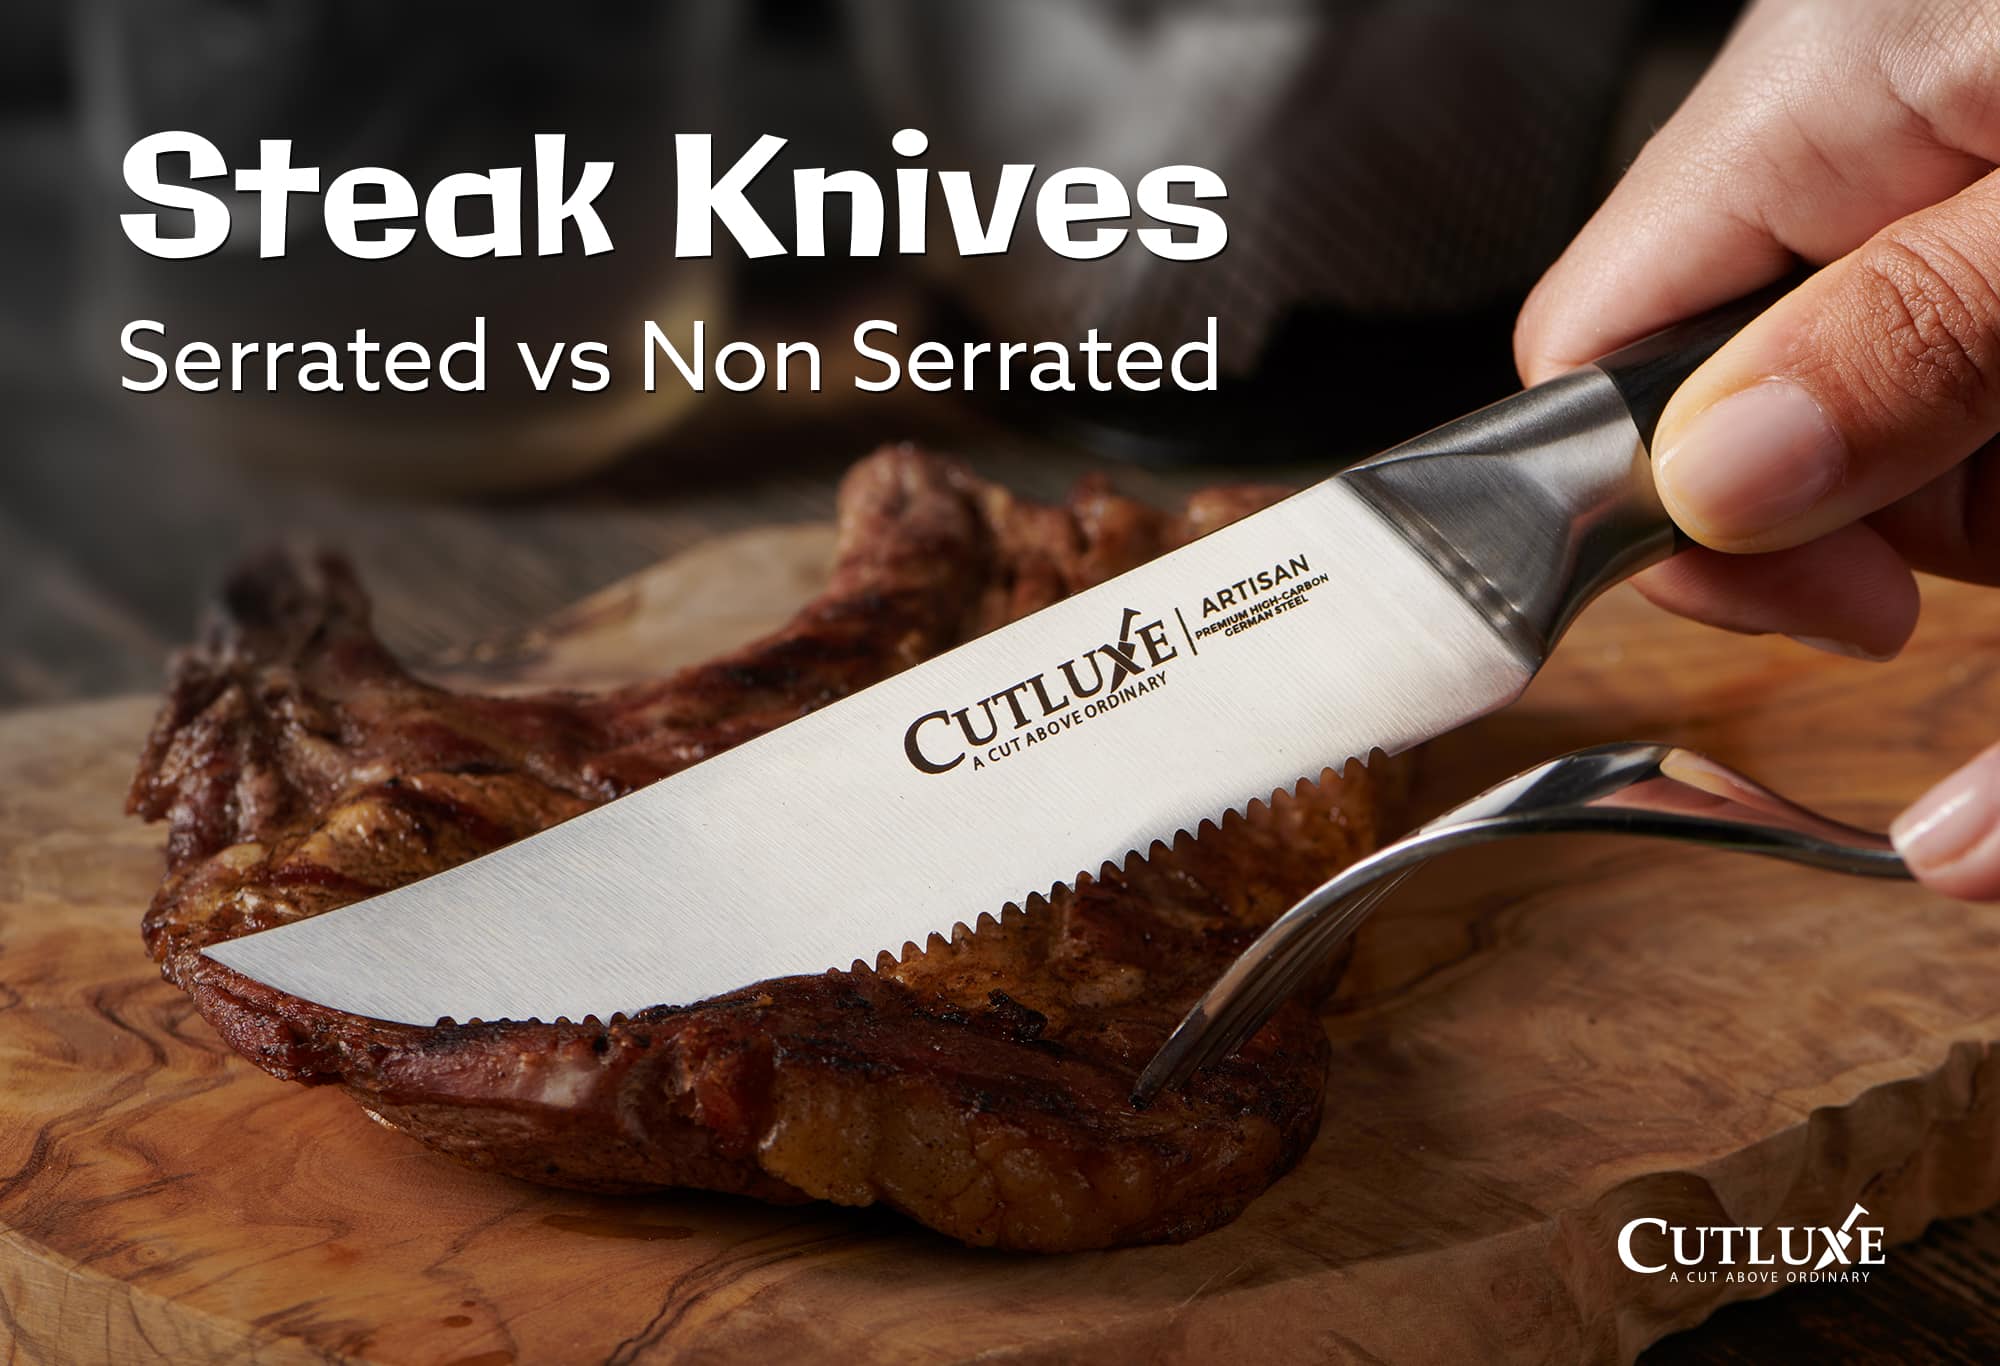 Serrated vs Non Serrated Steak Knives